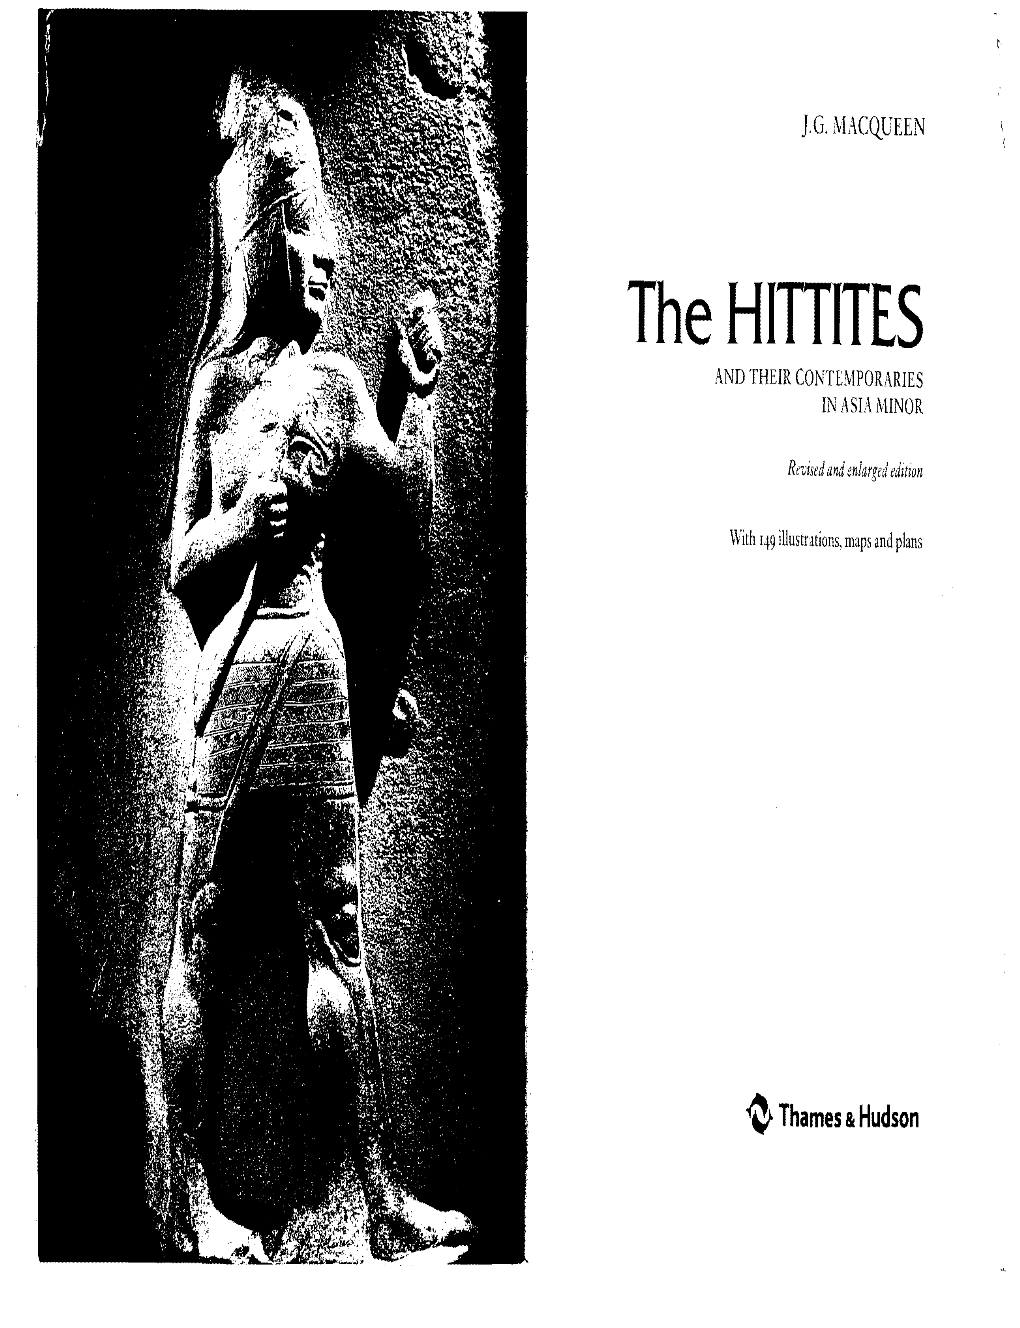 Additional Reading on Hittite History